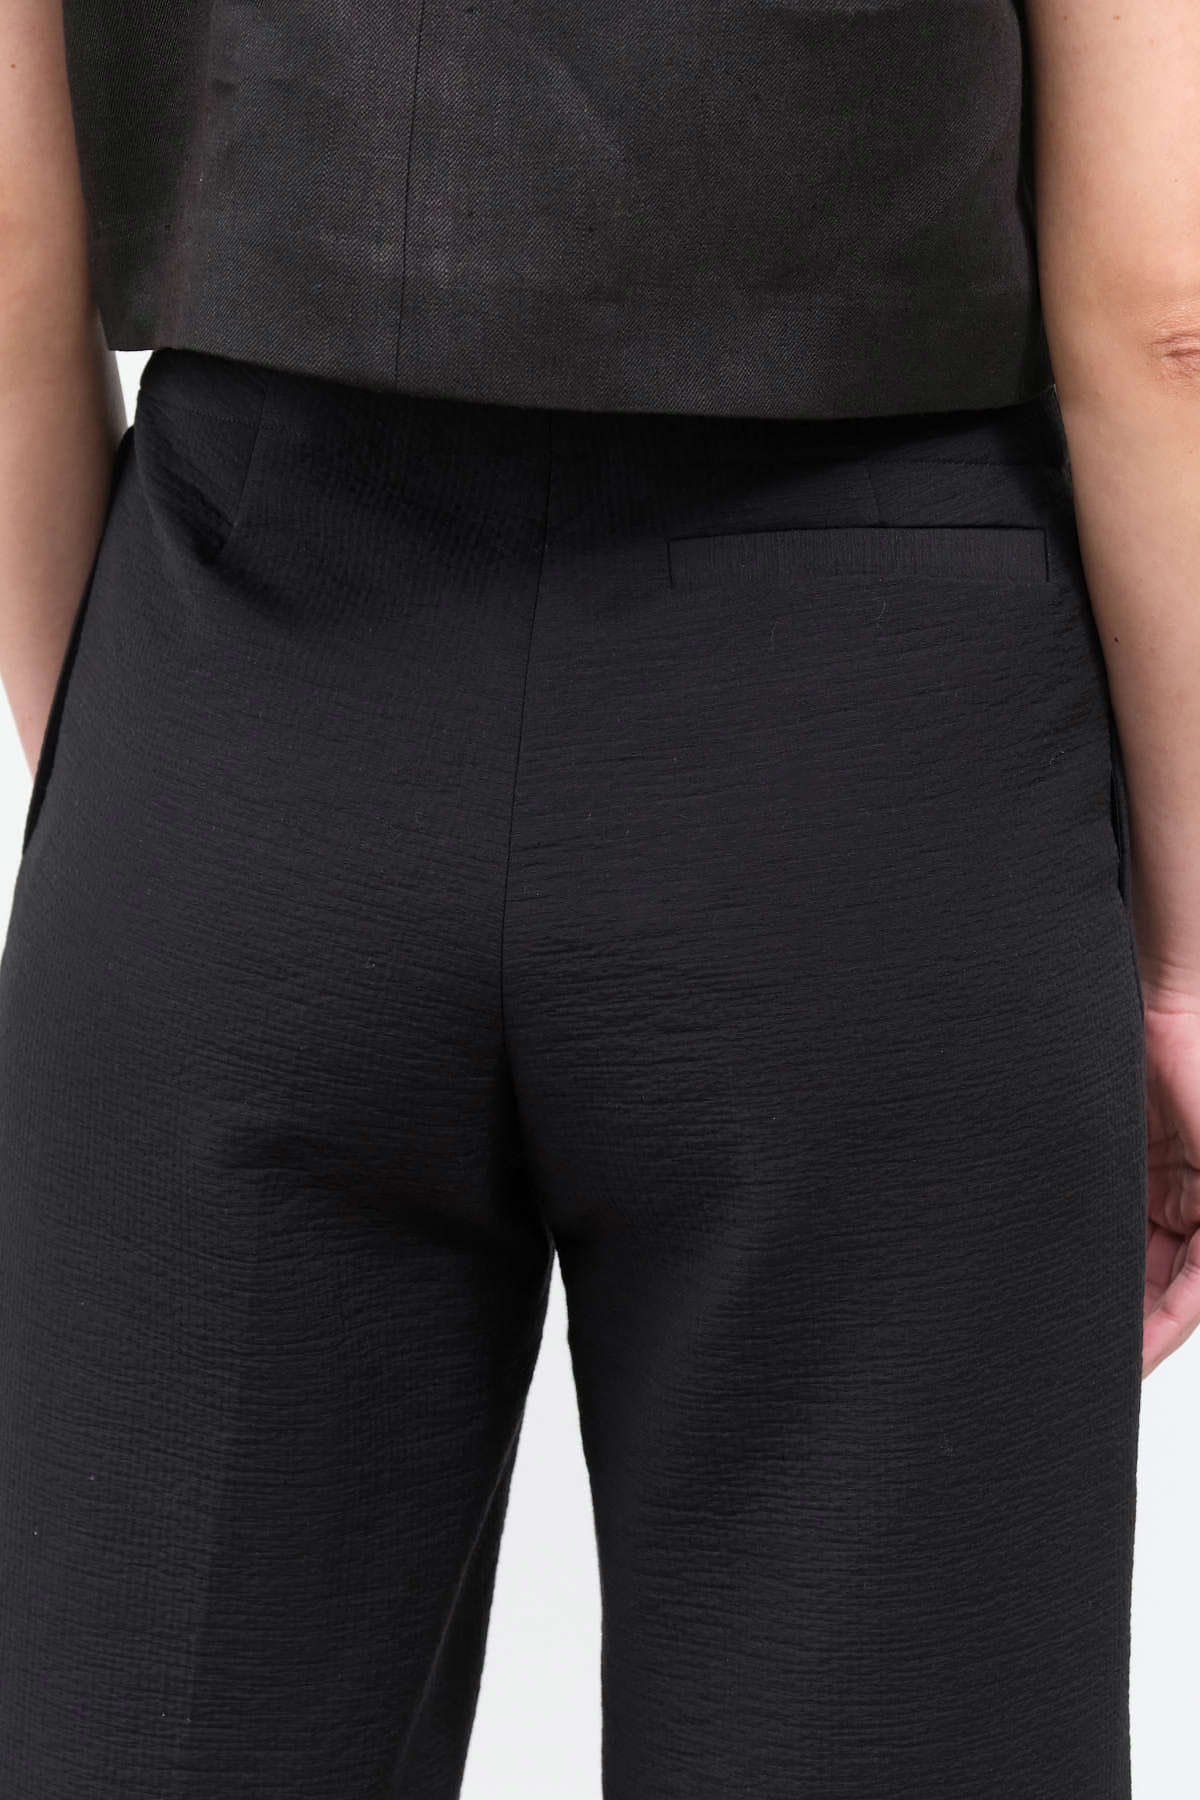 Rear pocket view of Roa Pant in Black